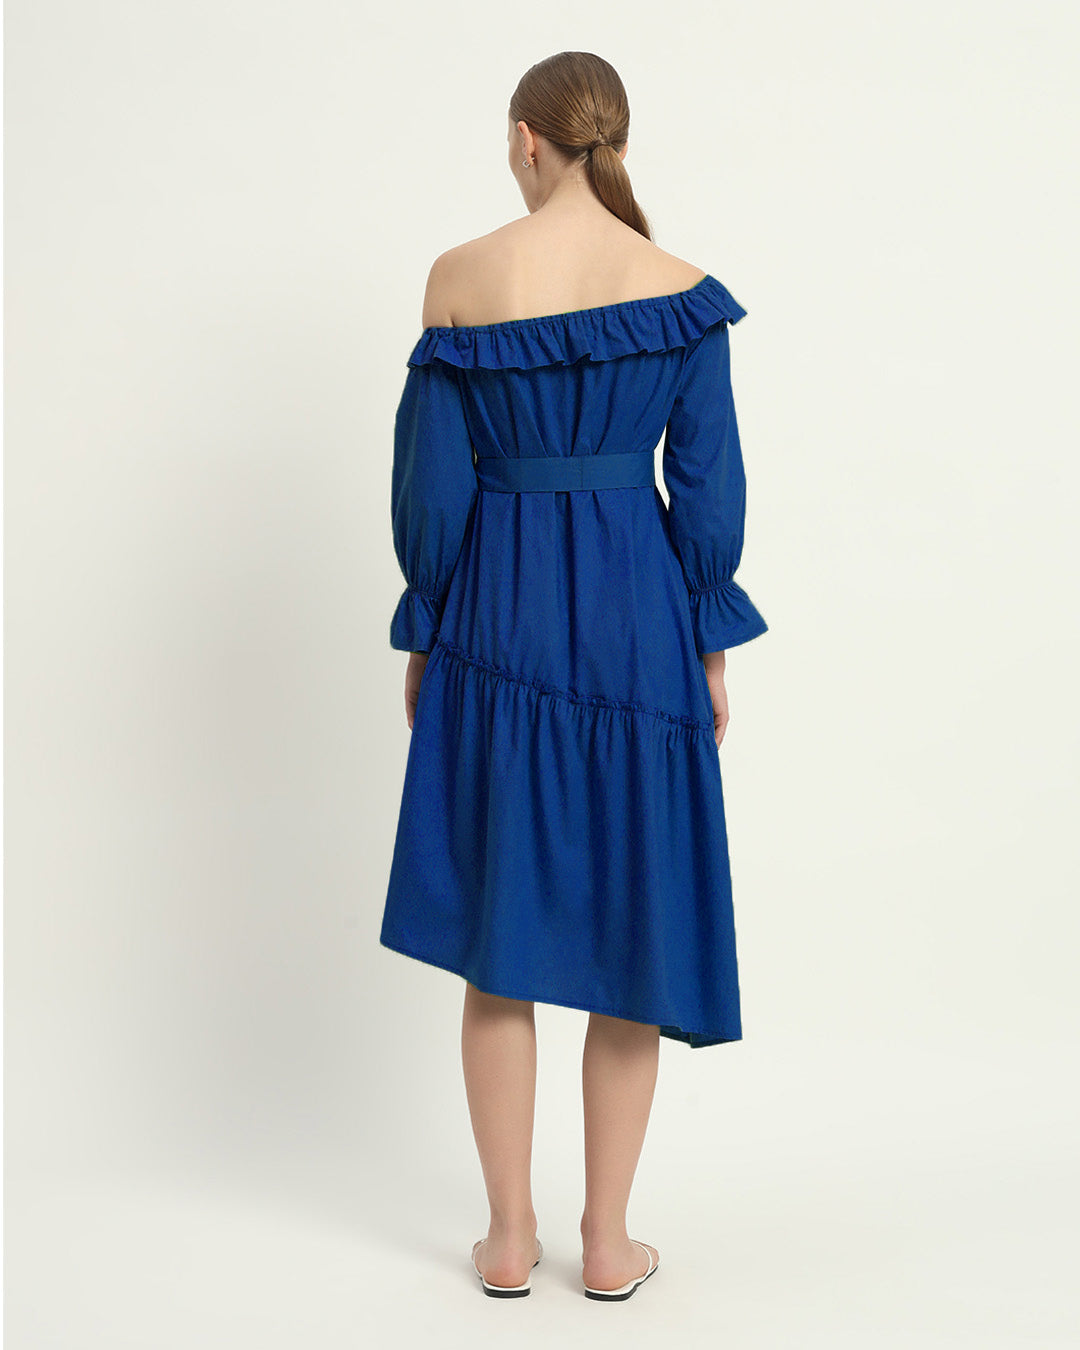 The Cobalt Stellata Cotton Dress